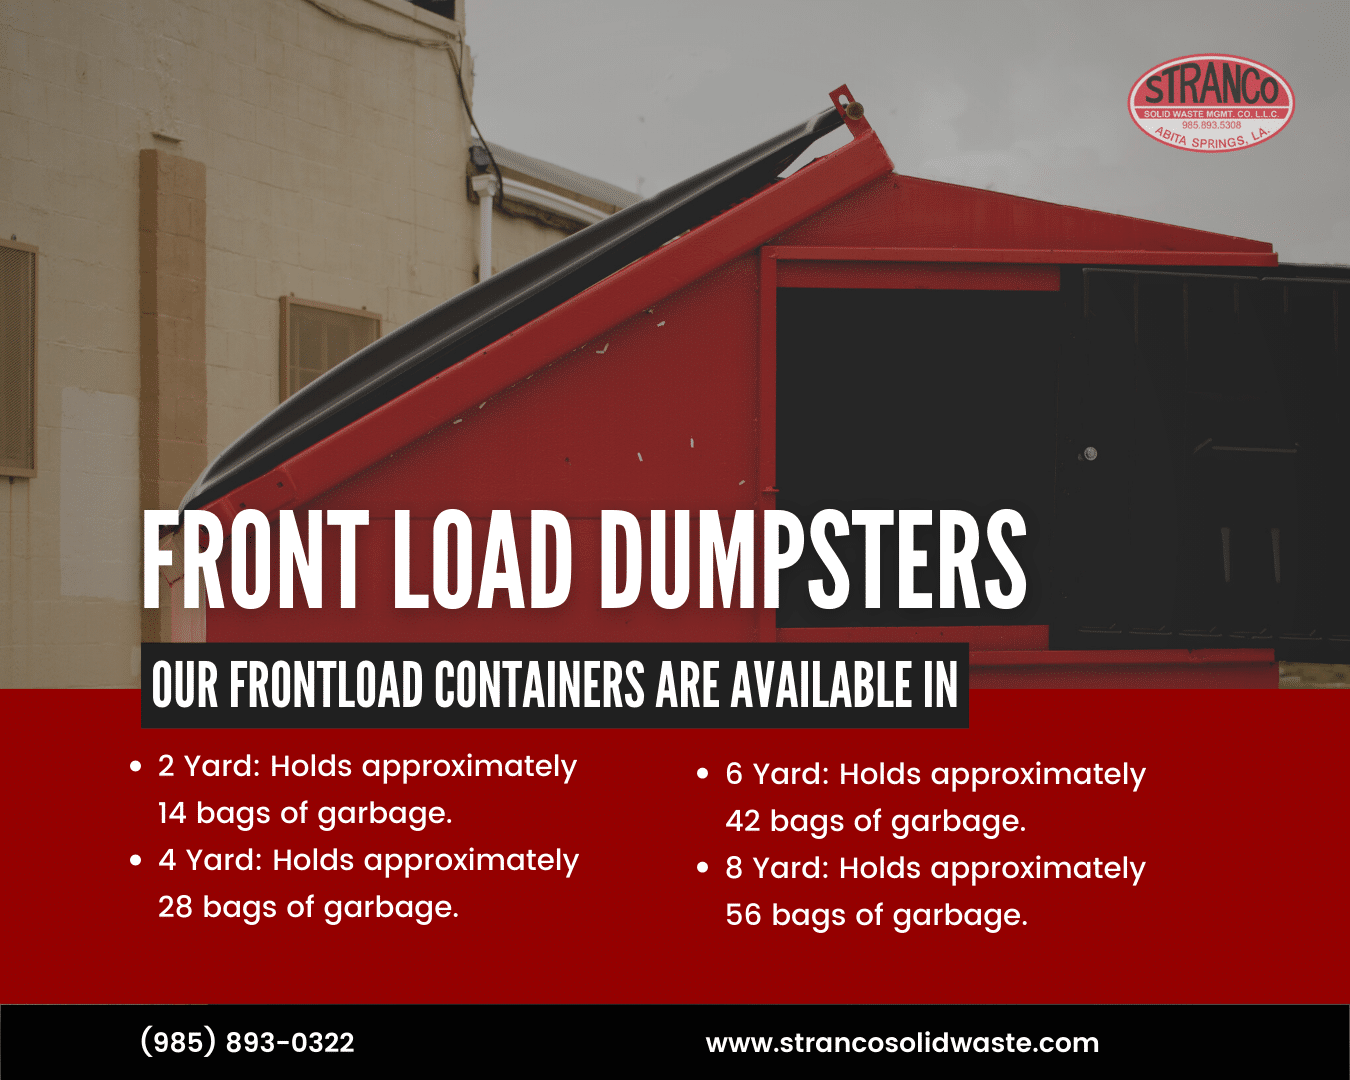 Front load dumpster service for businesses